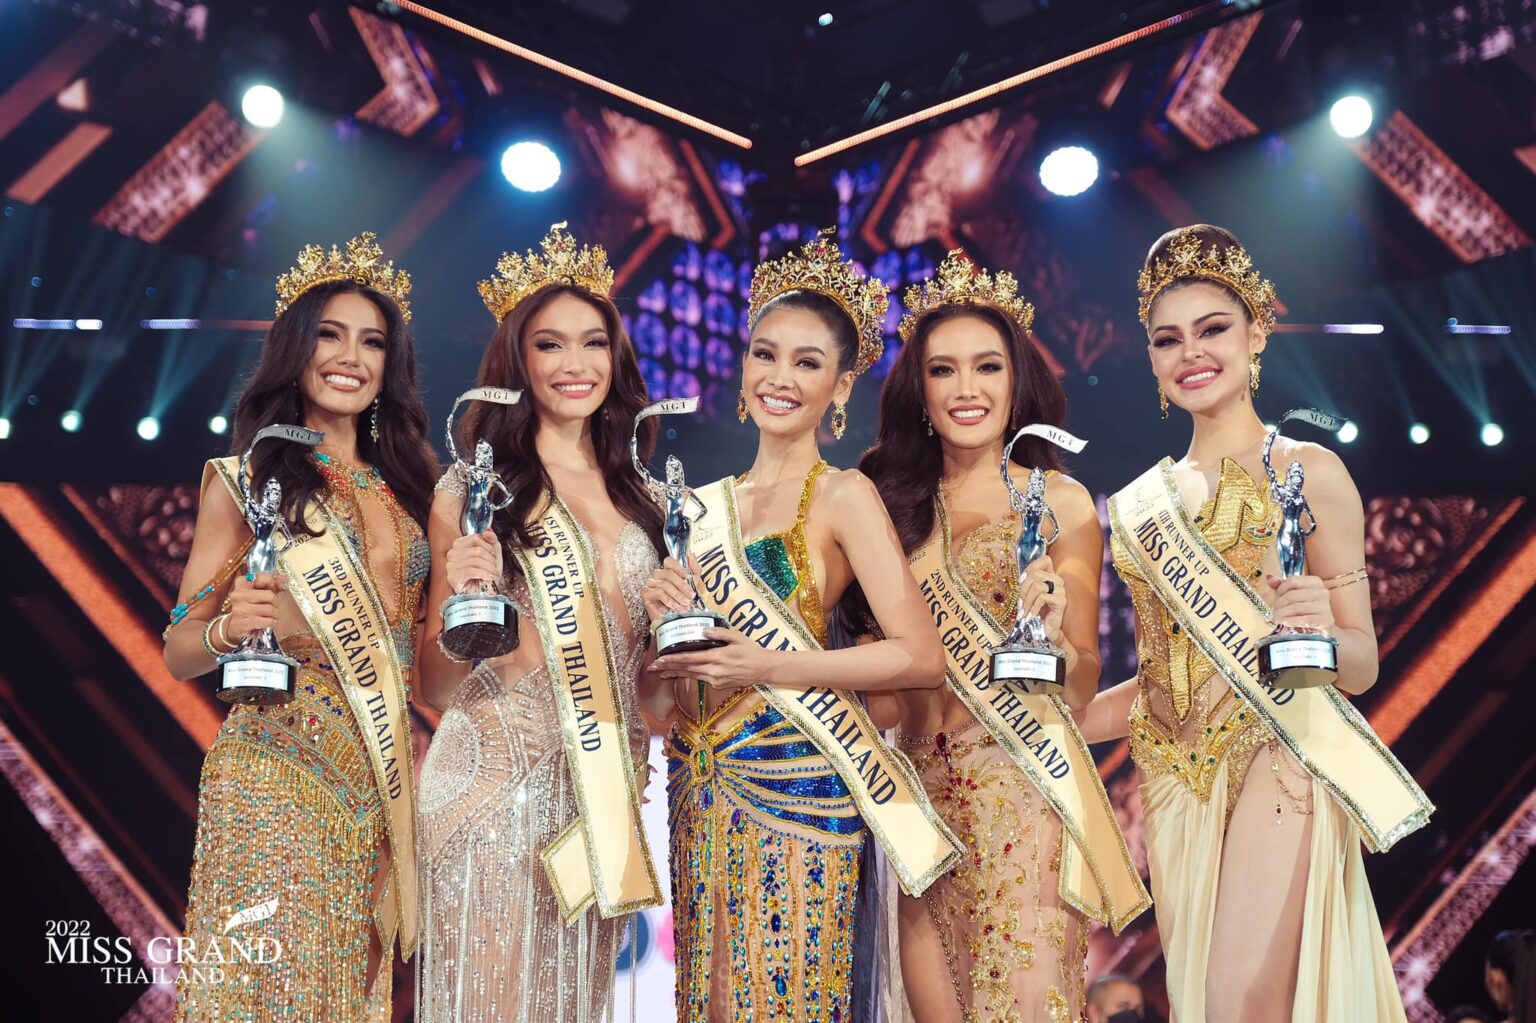 Engfa Waraha crowned as Miss Grand Thailand 2022 at Miss Grand final